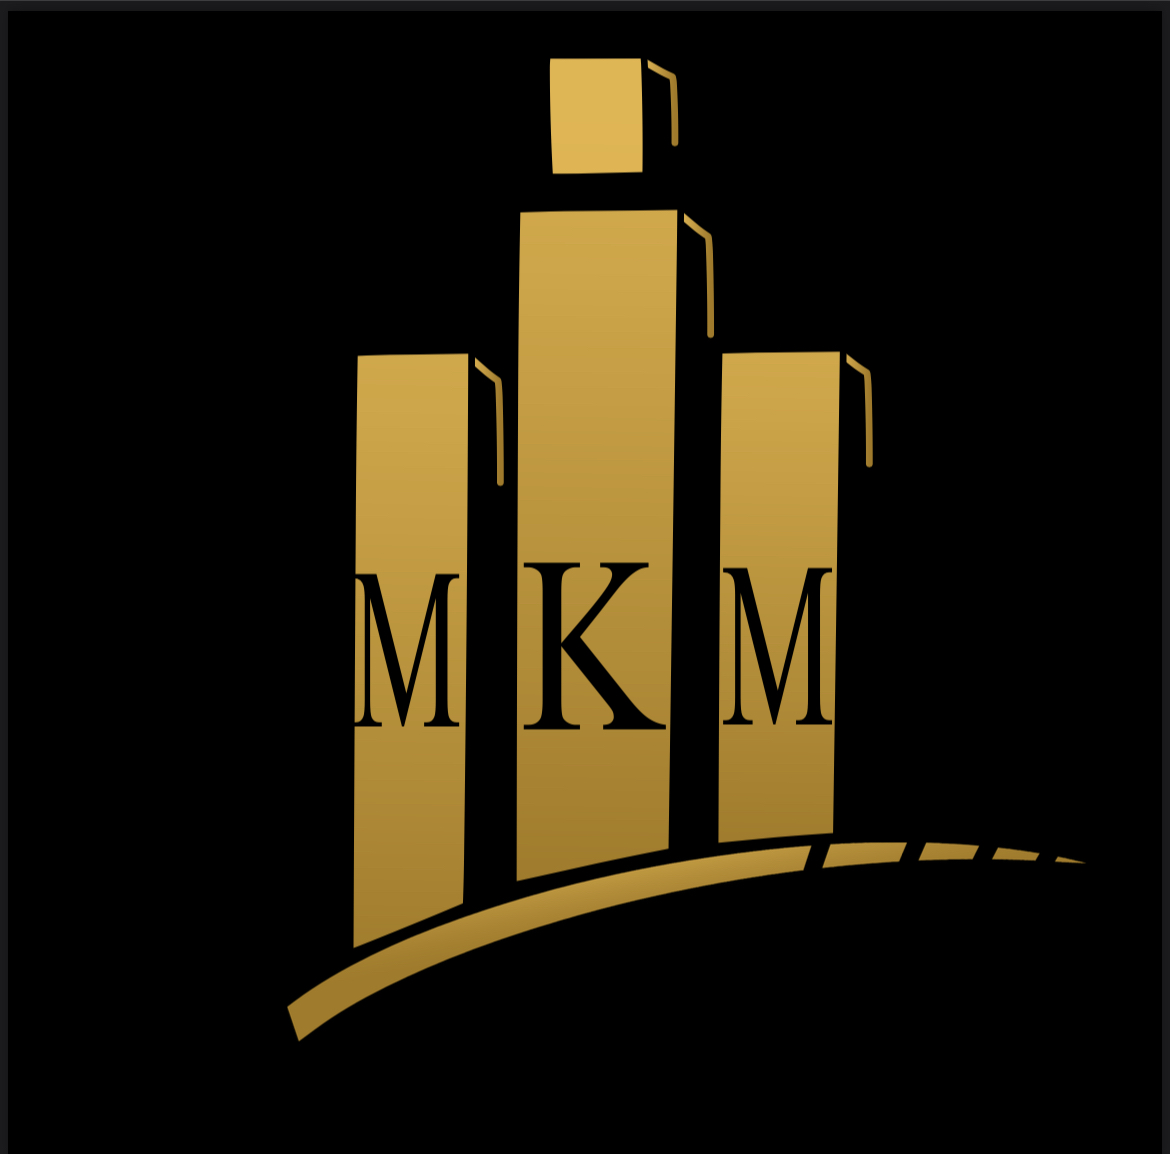   MKM Brokers